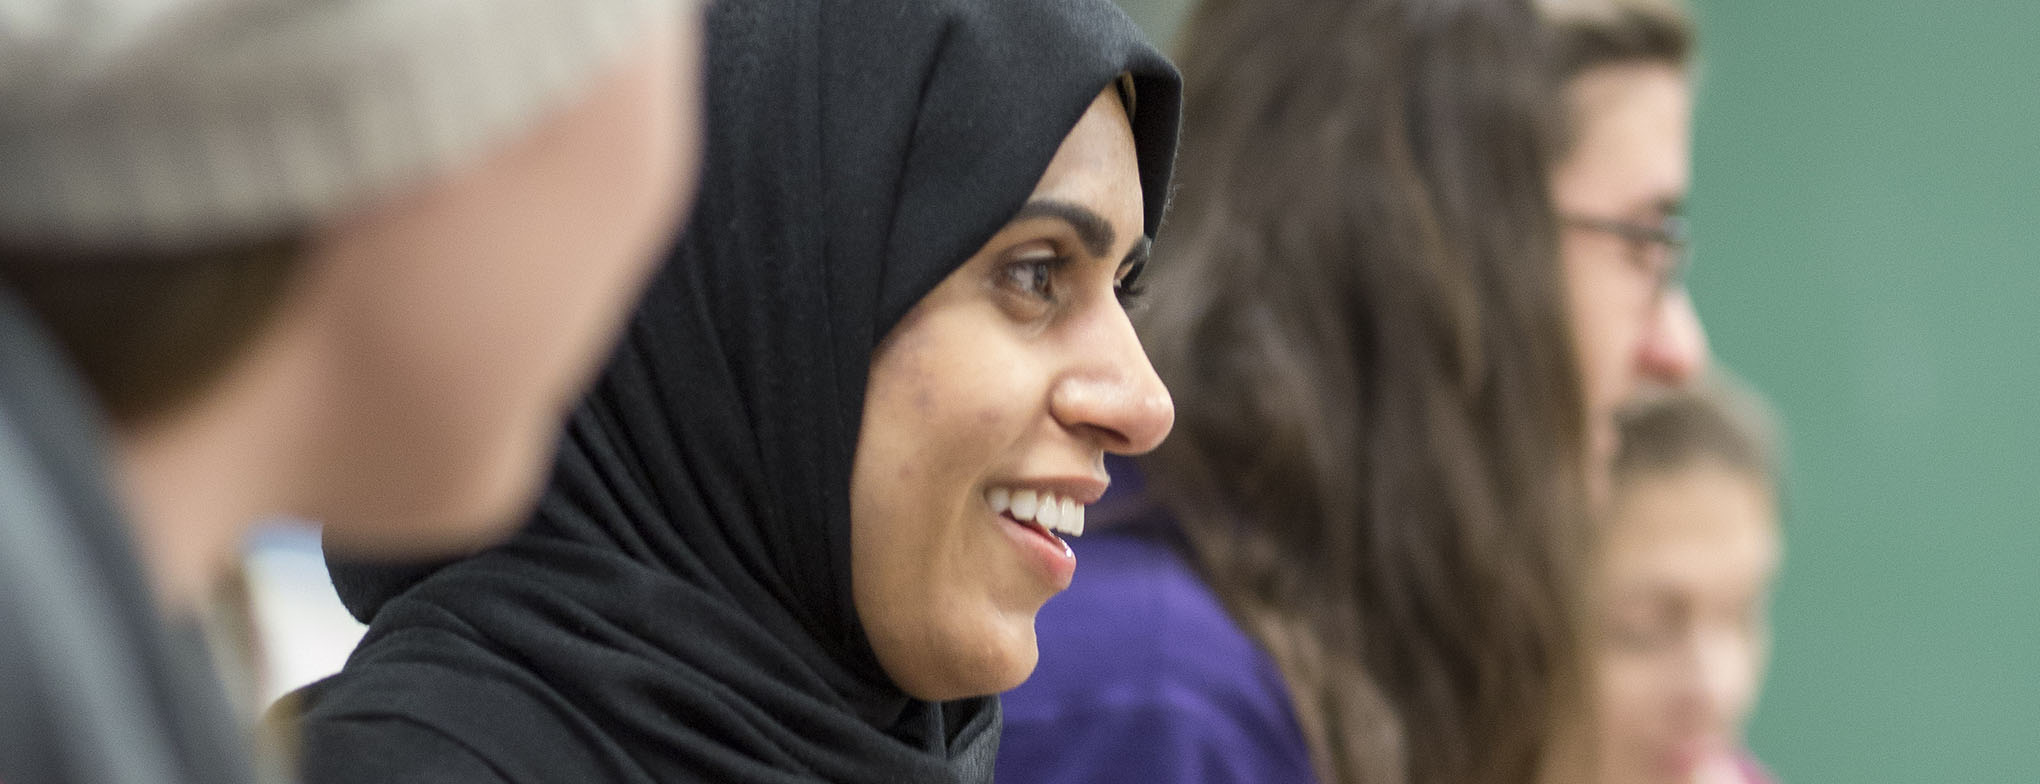 Muslim woman in classroom